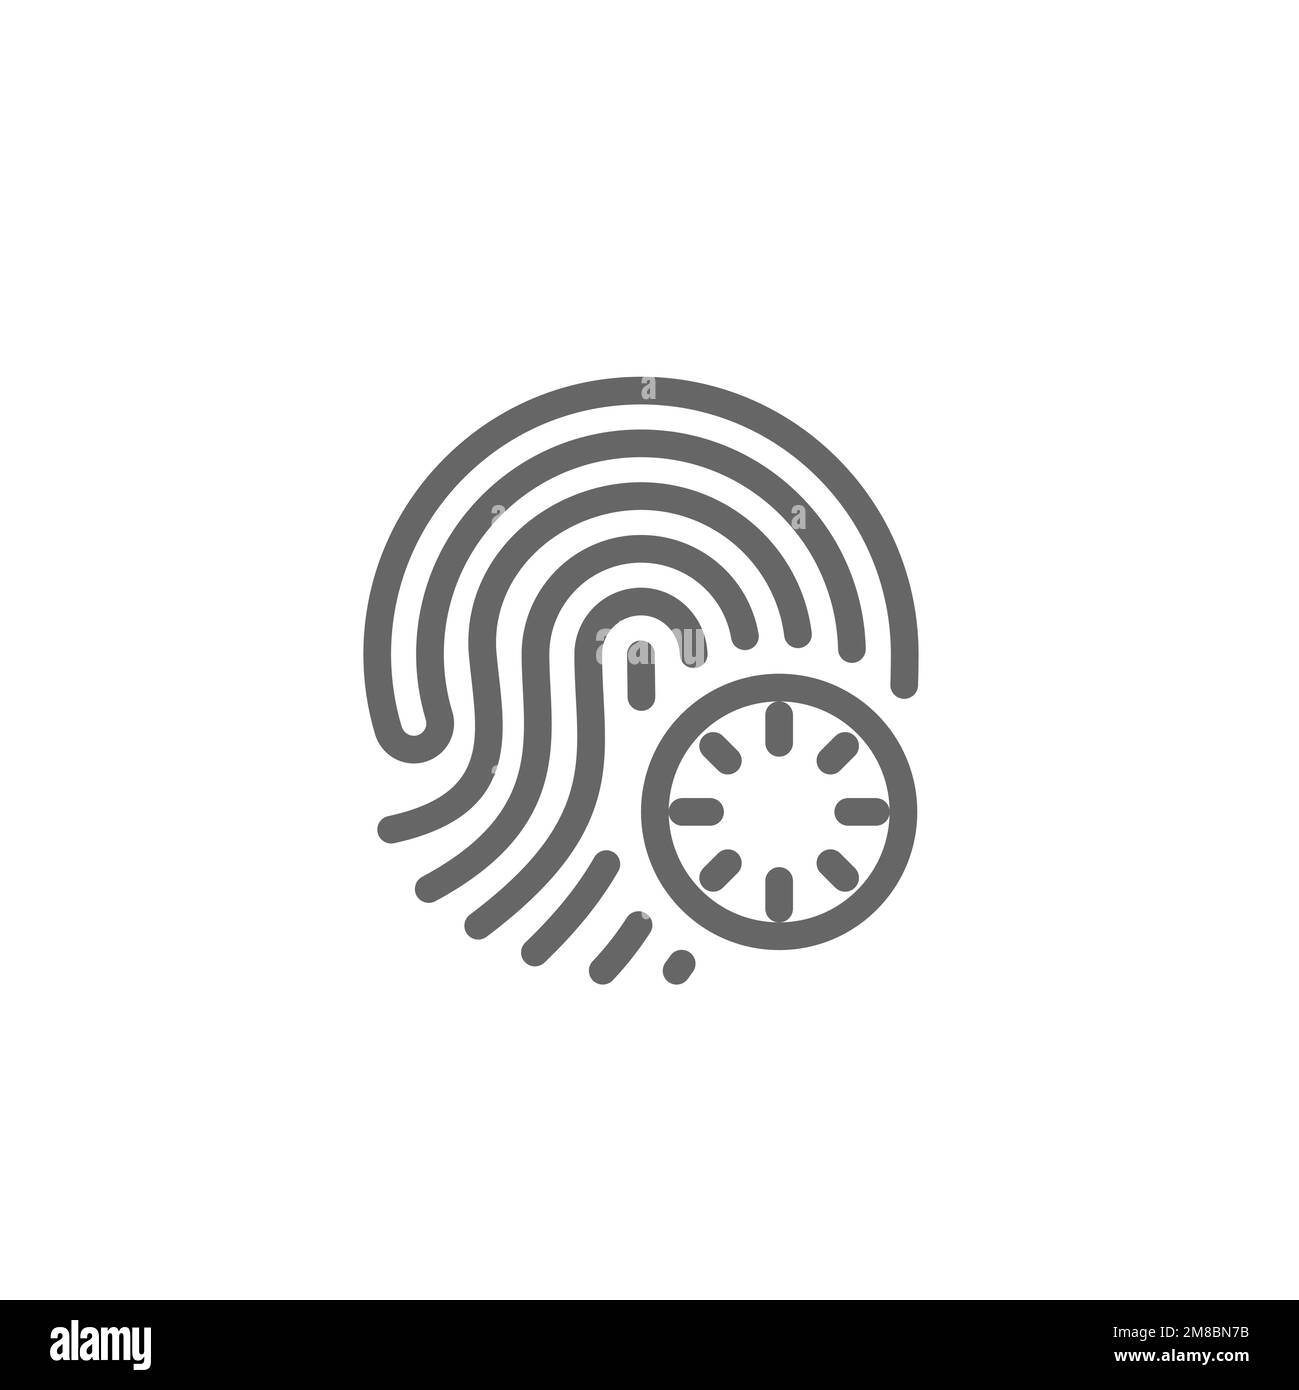 Fingerprint unlock line icon. Graphic resource template, vector illustration. Stock Vector